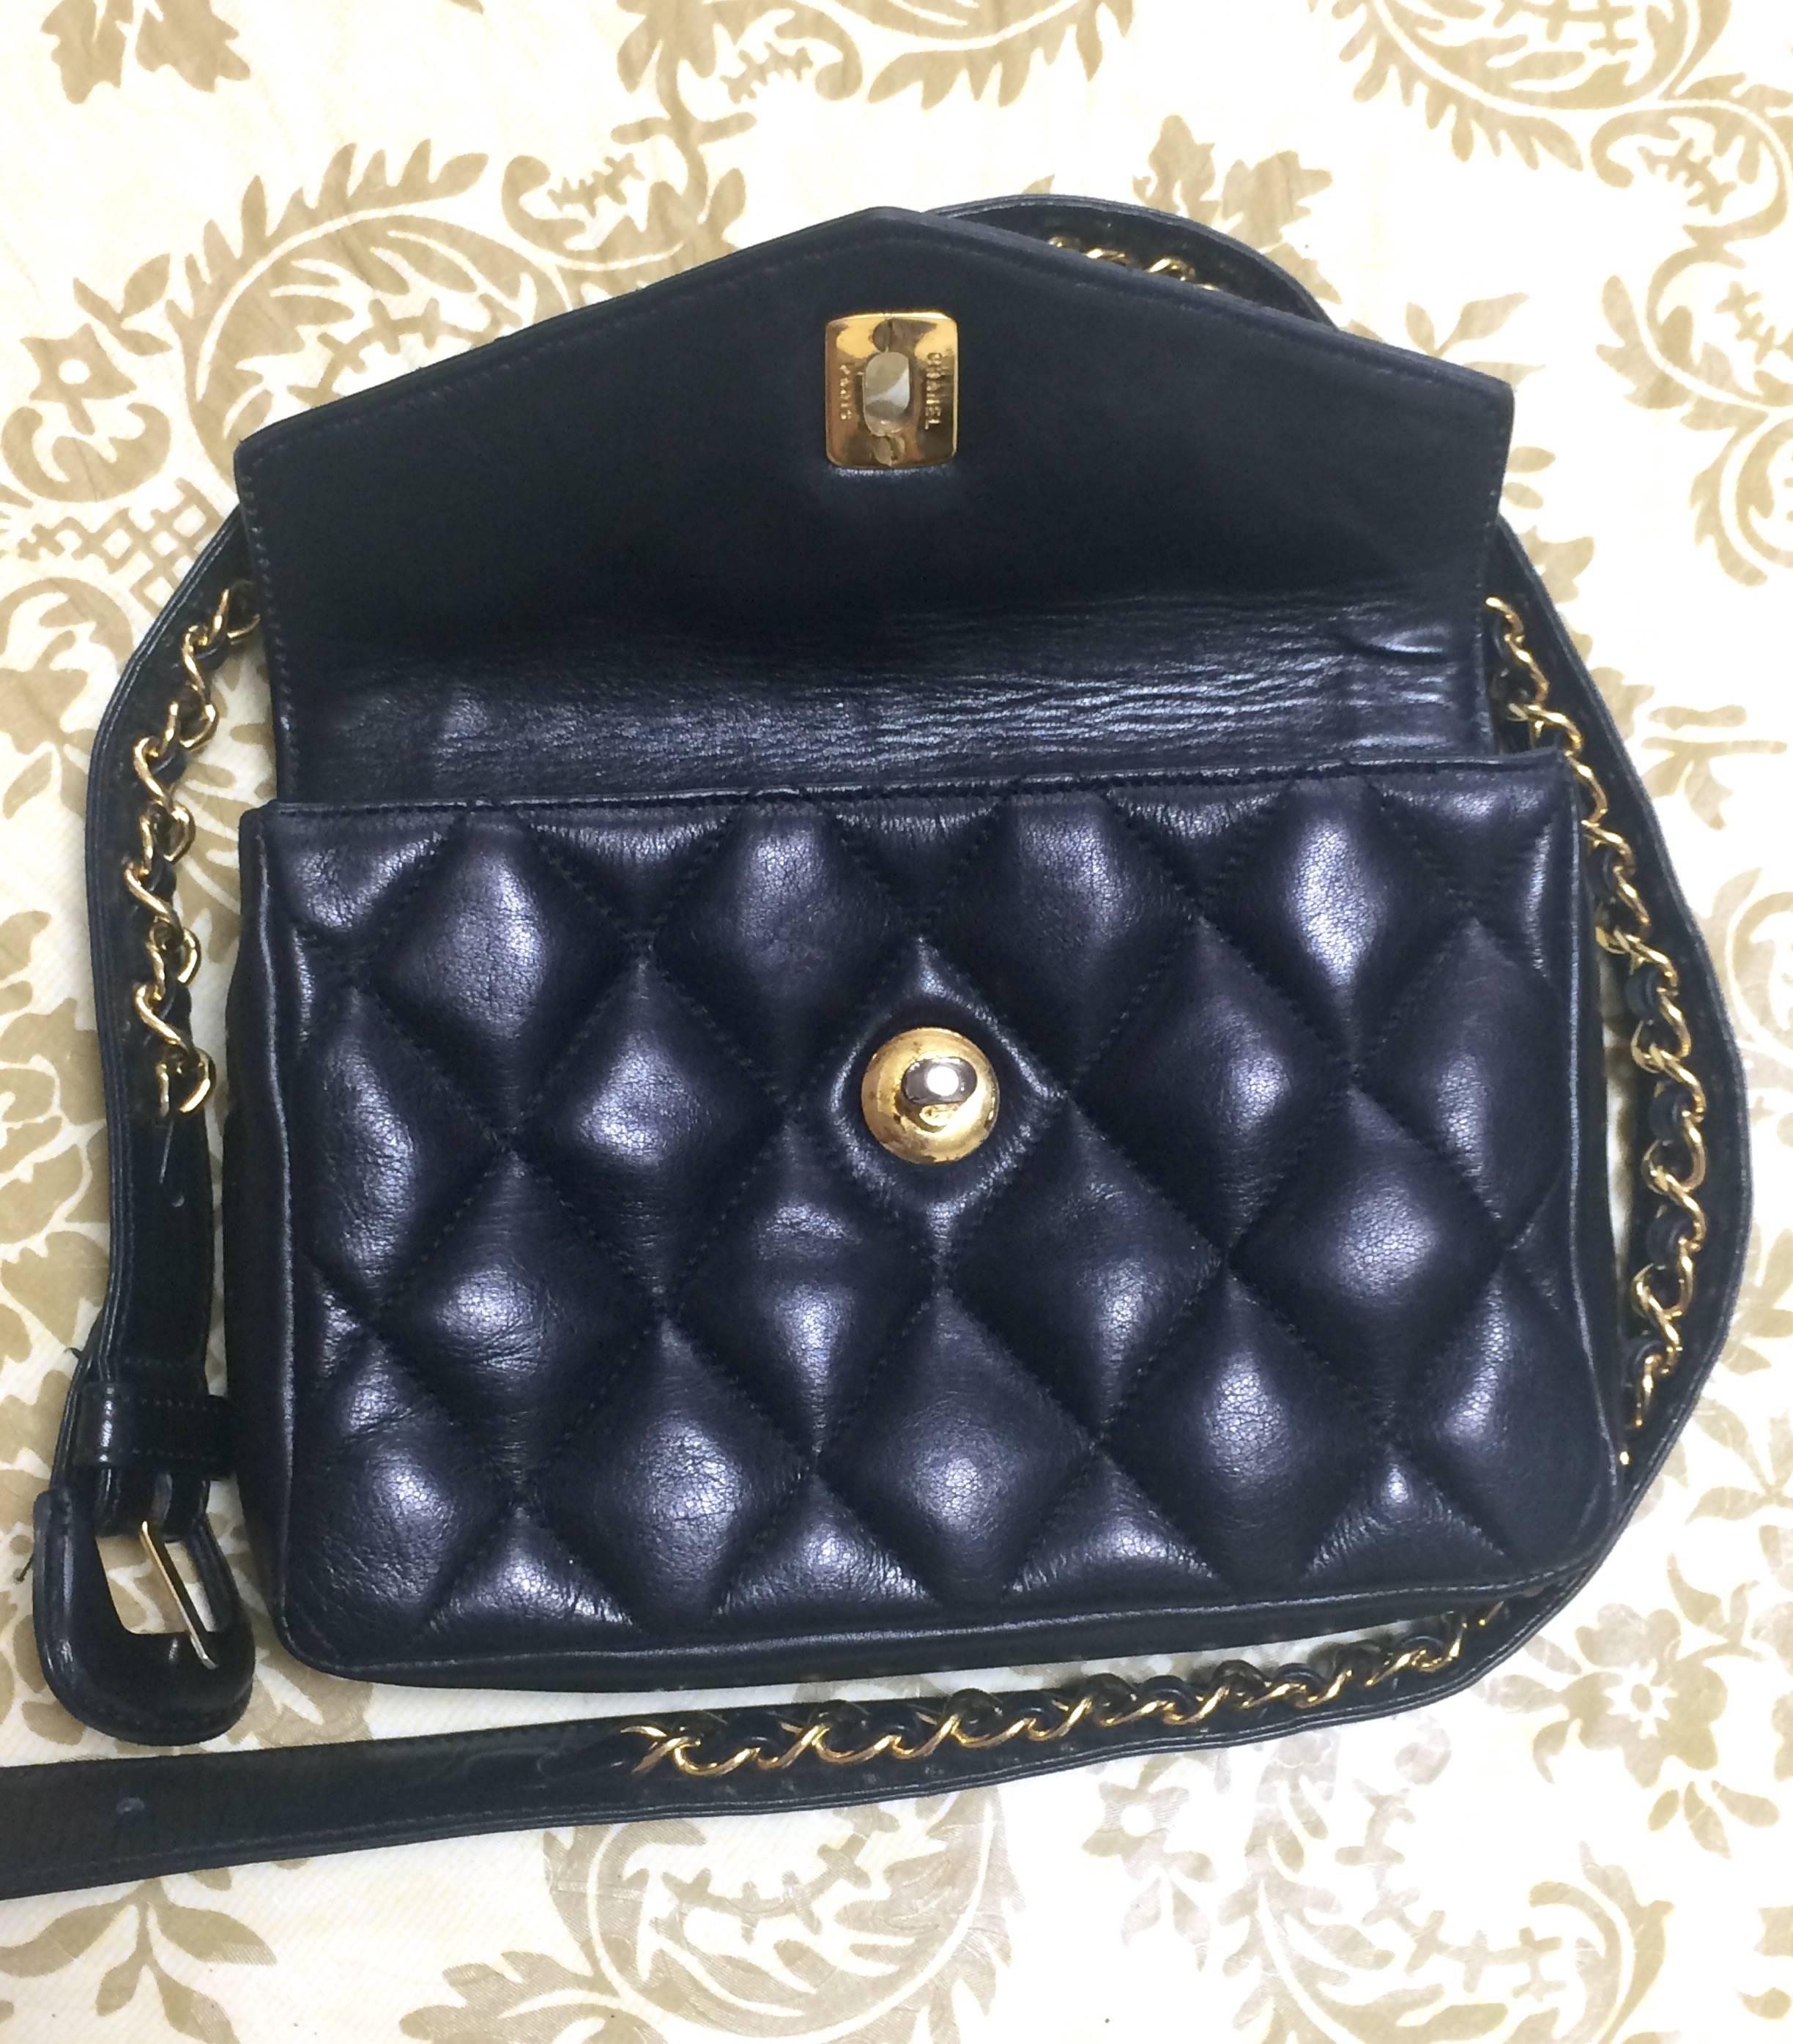 Vintage CHANEL black leather waist bag, fanny pack with golden chain belt & CC. 1